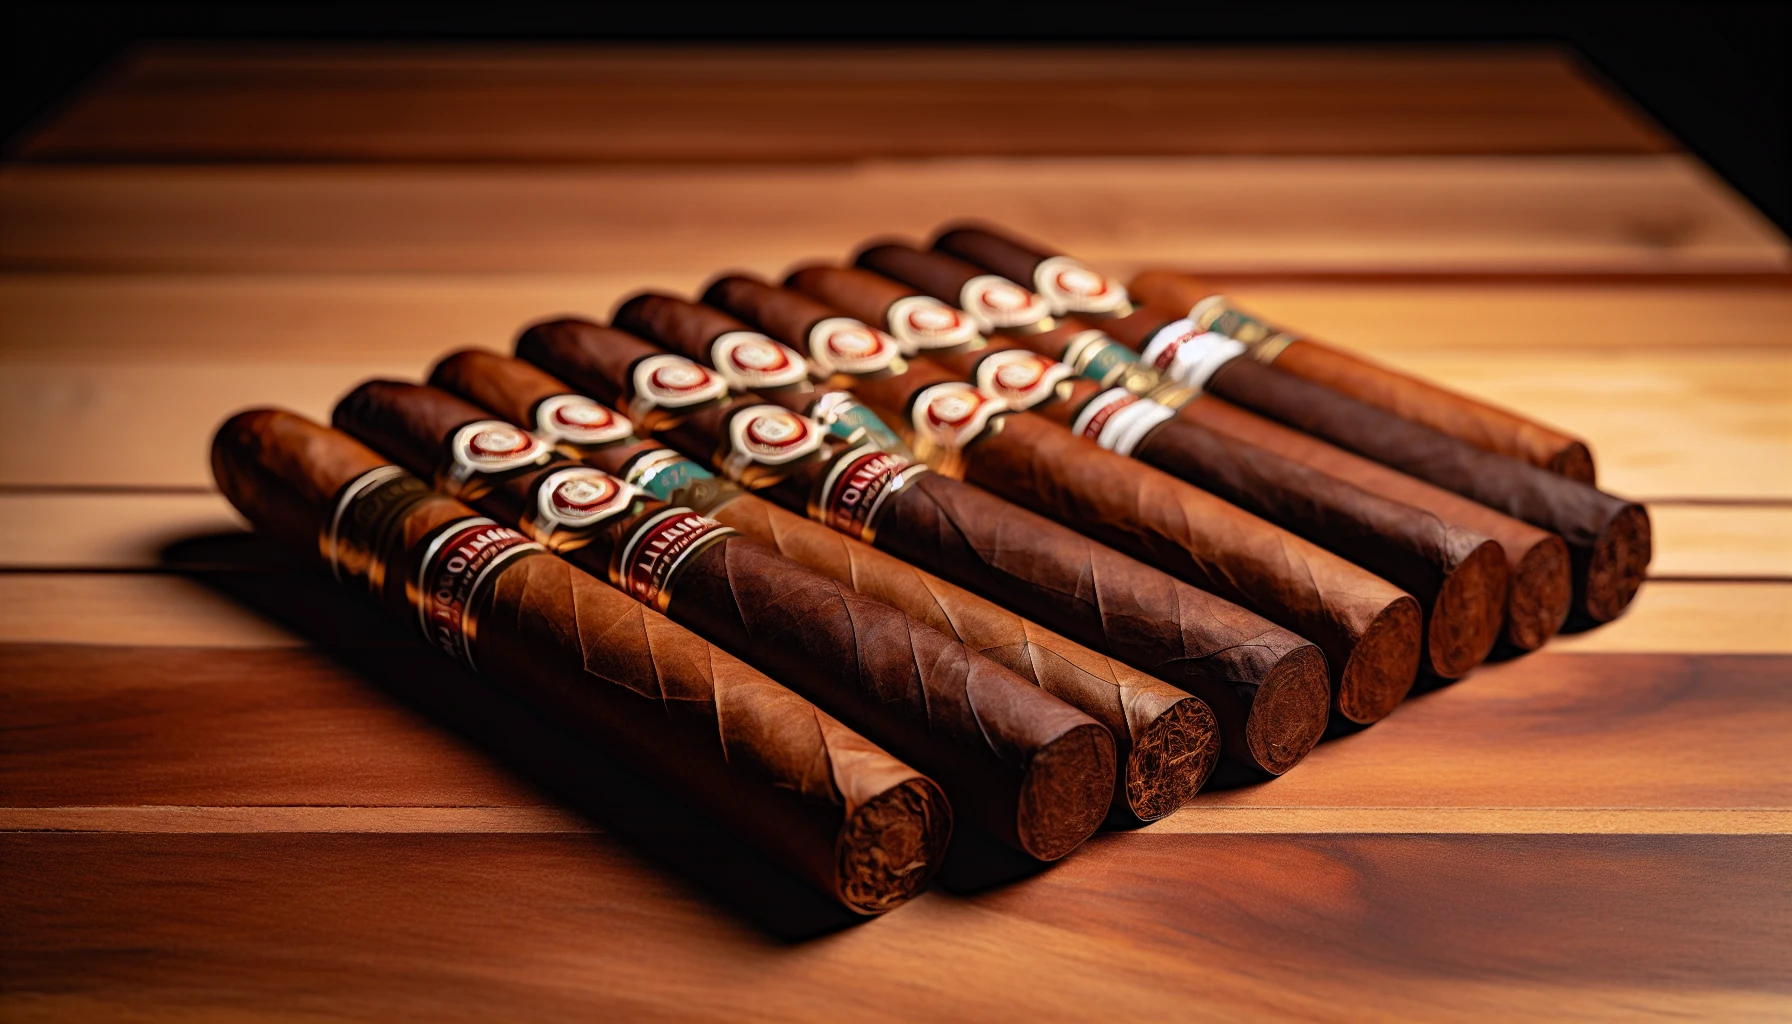 A variety of San Lotano Connecticut cigars